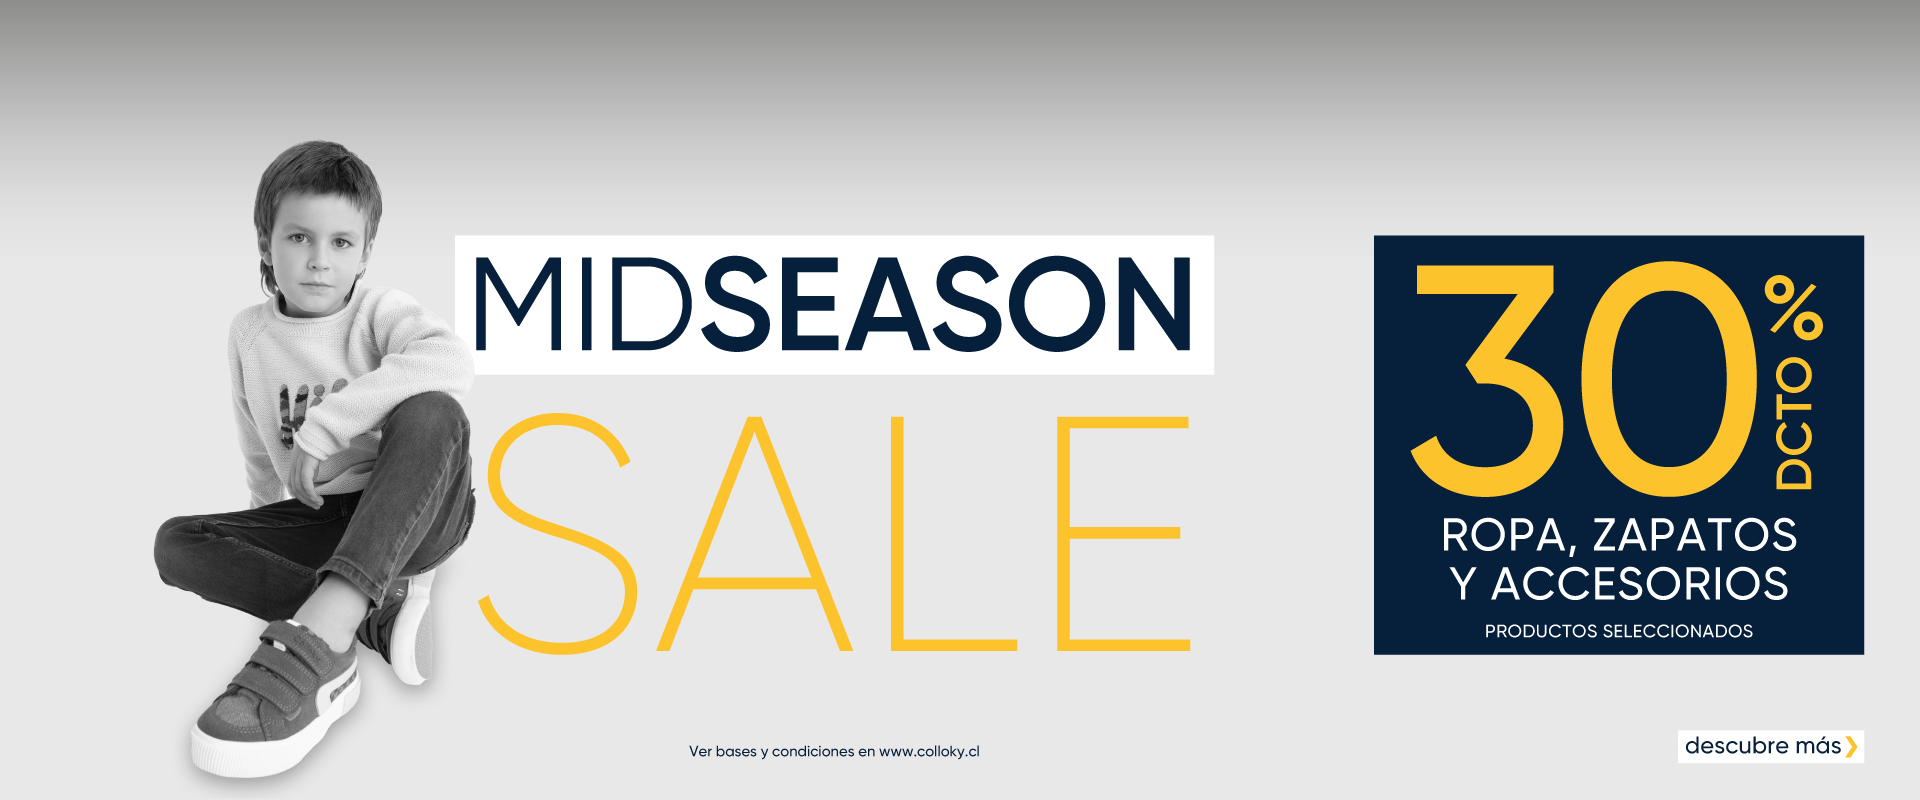 Midseason sale